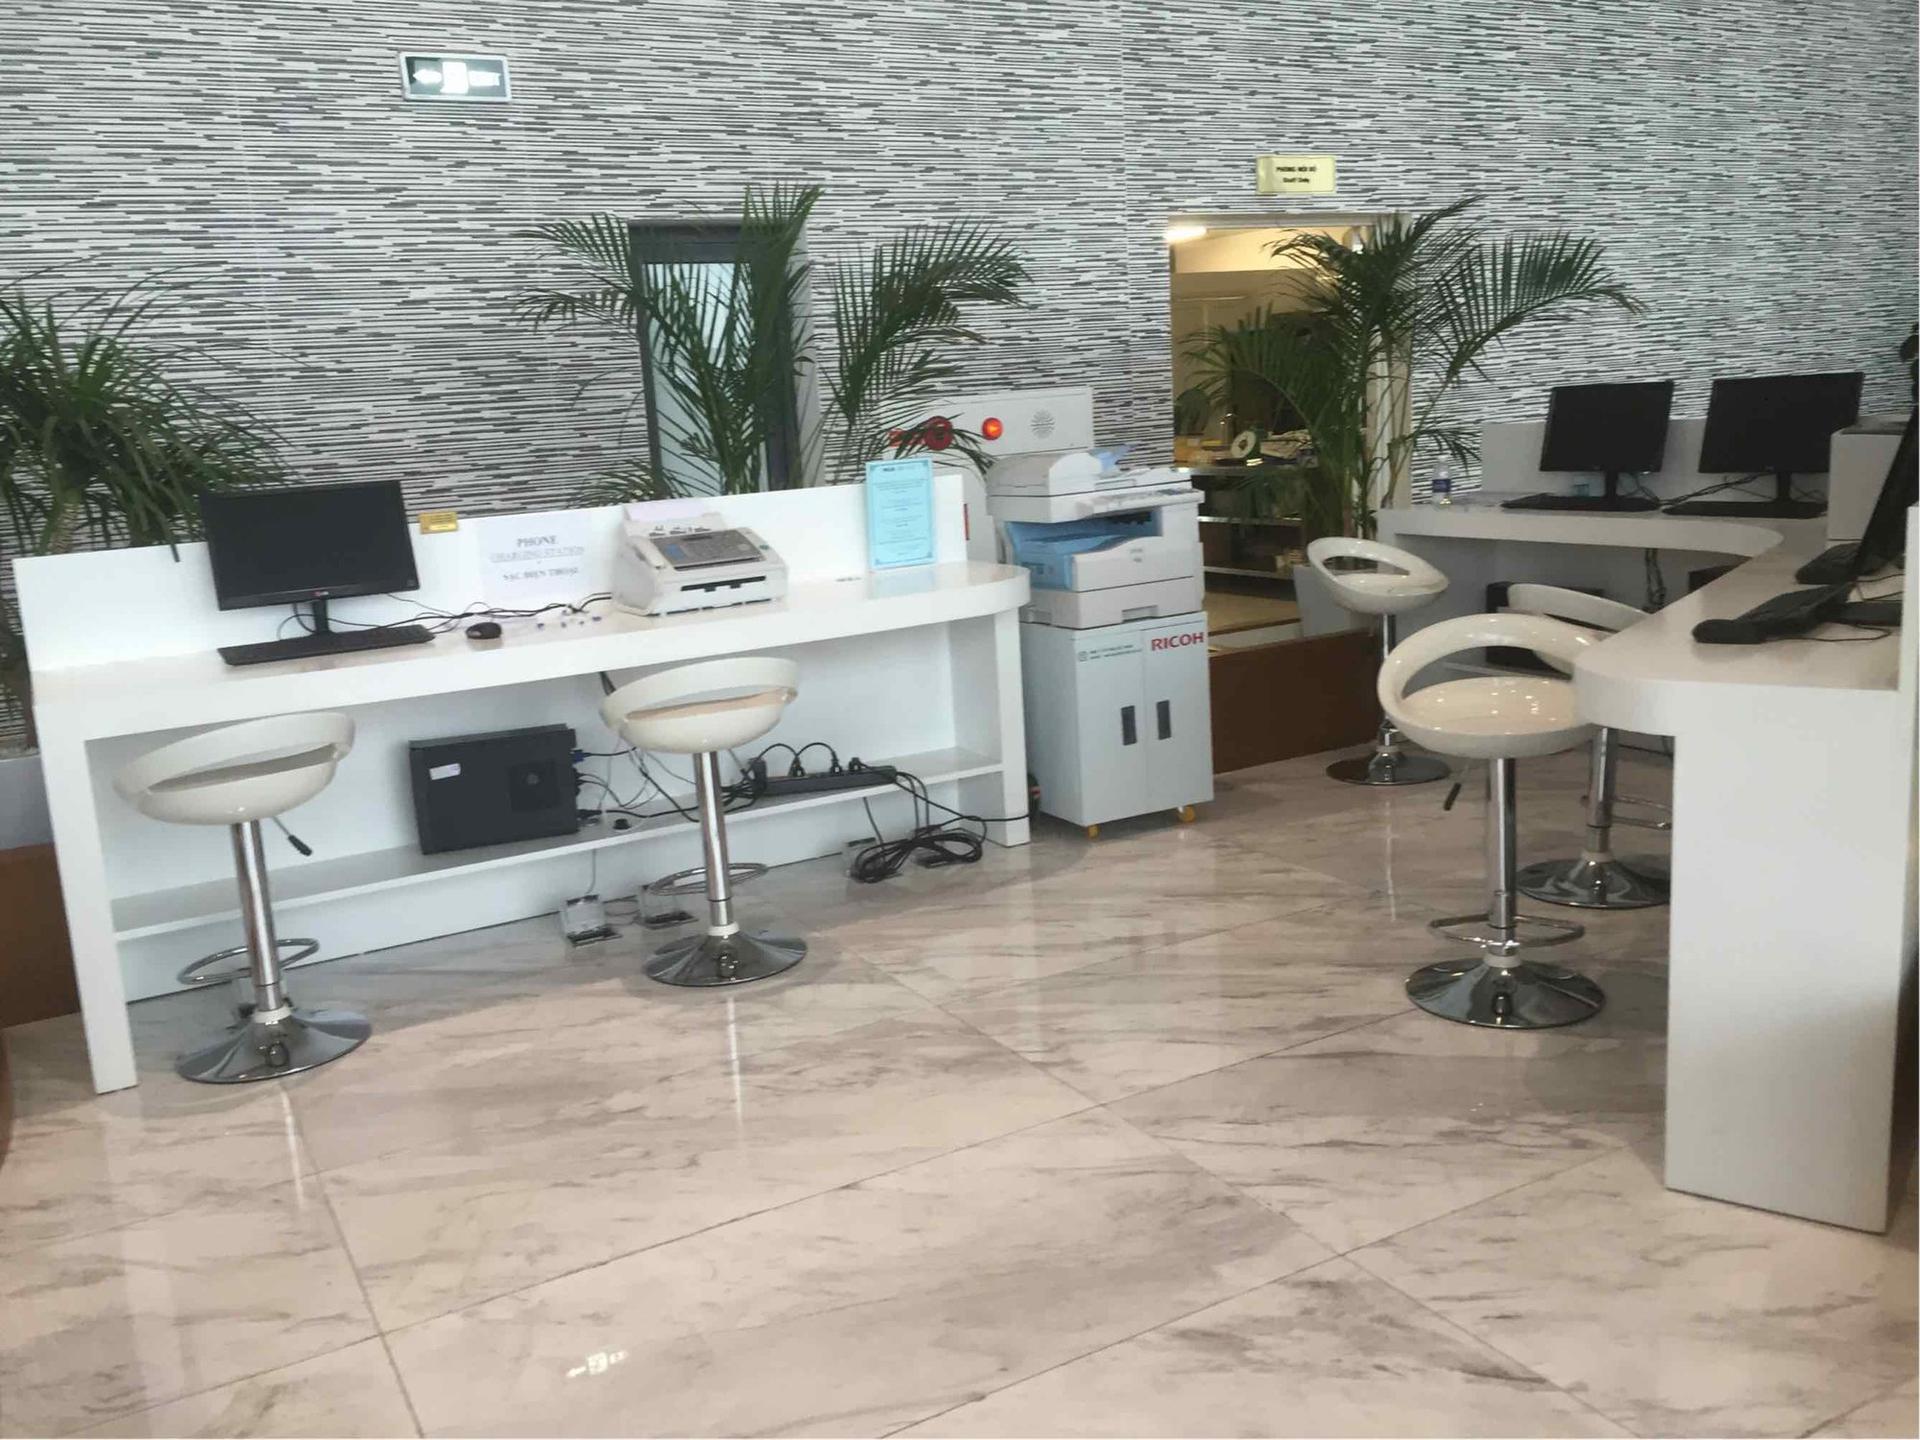 Noi Bai International Airport Business Lounge image 5 of 26